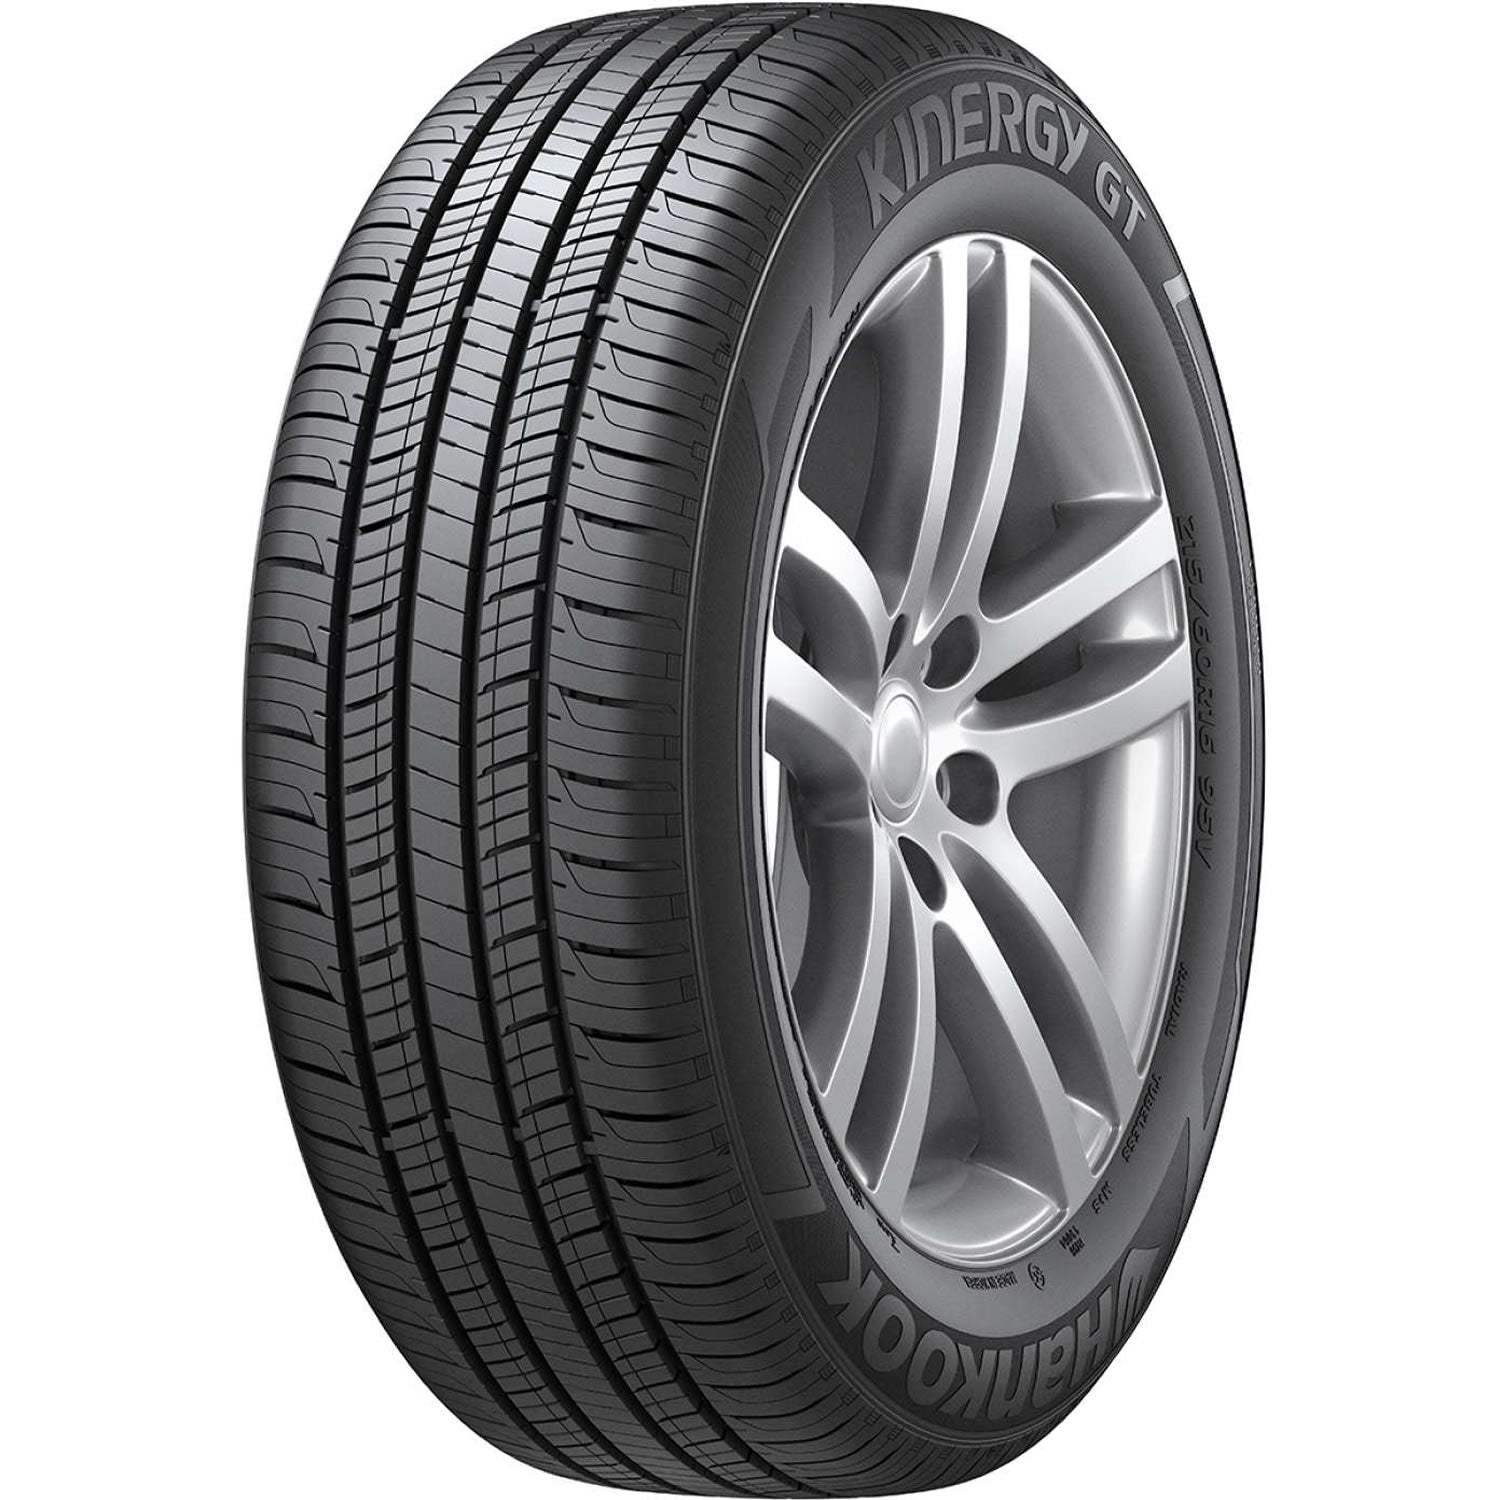 HANKOOK KINERGY GT 205/60R16 (25.8X8.1R 16) Tires